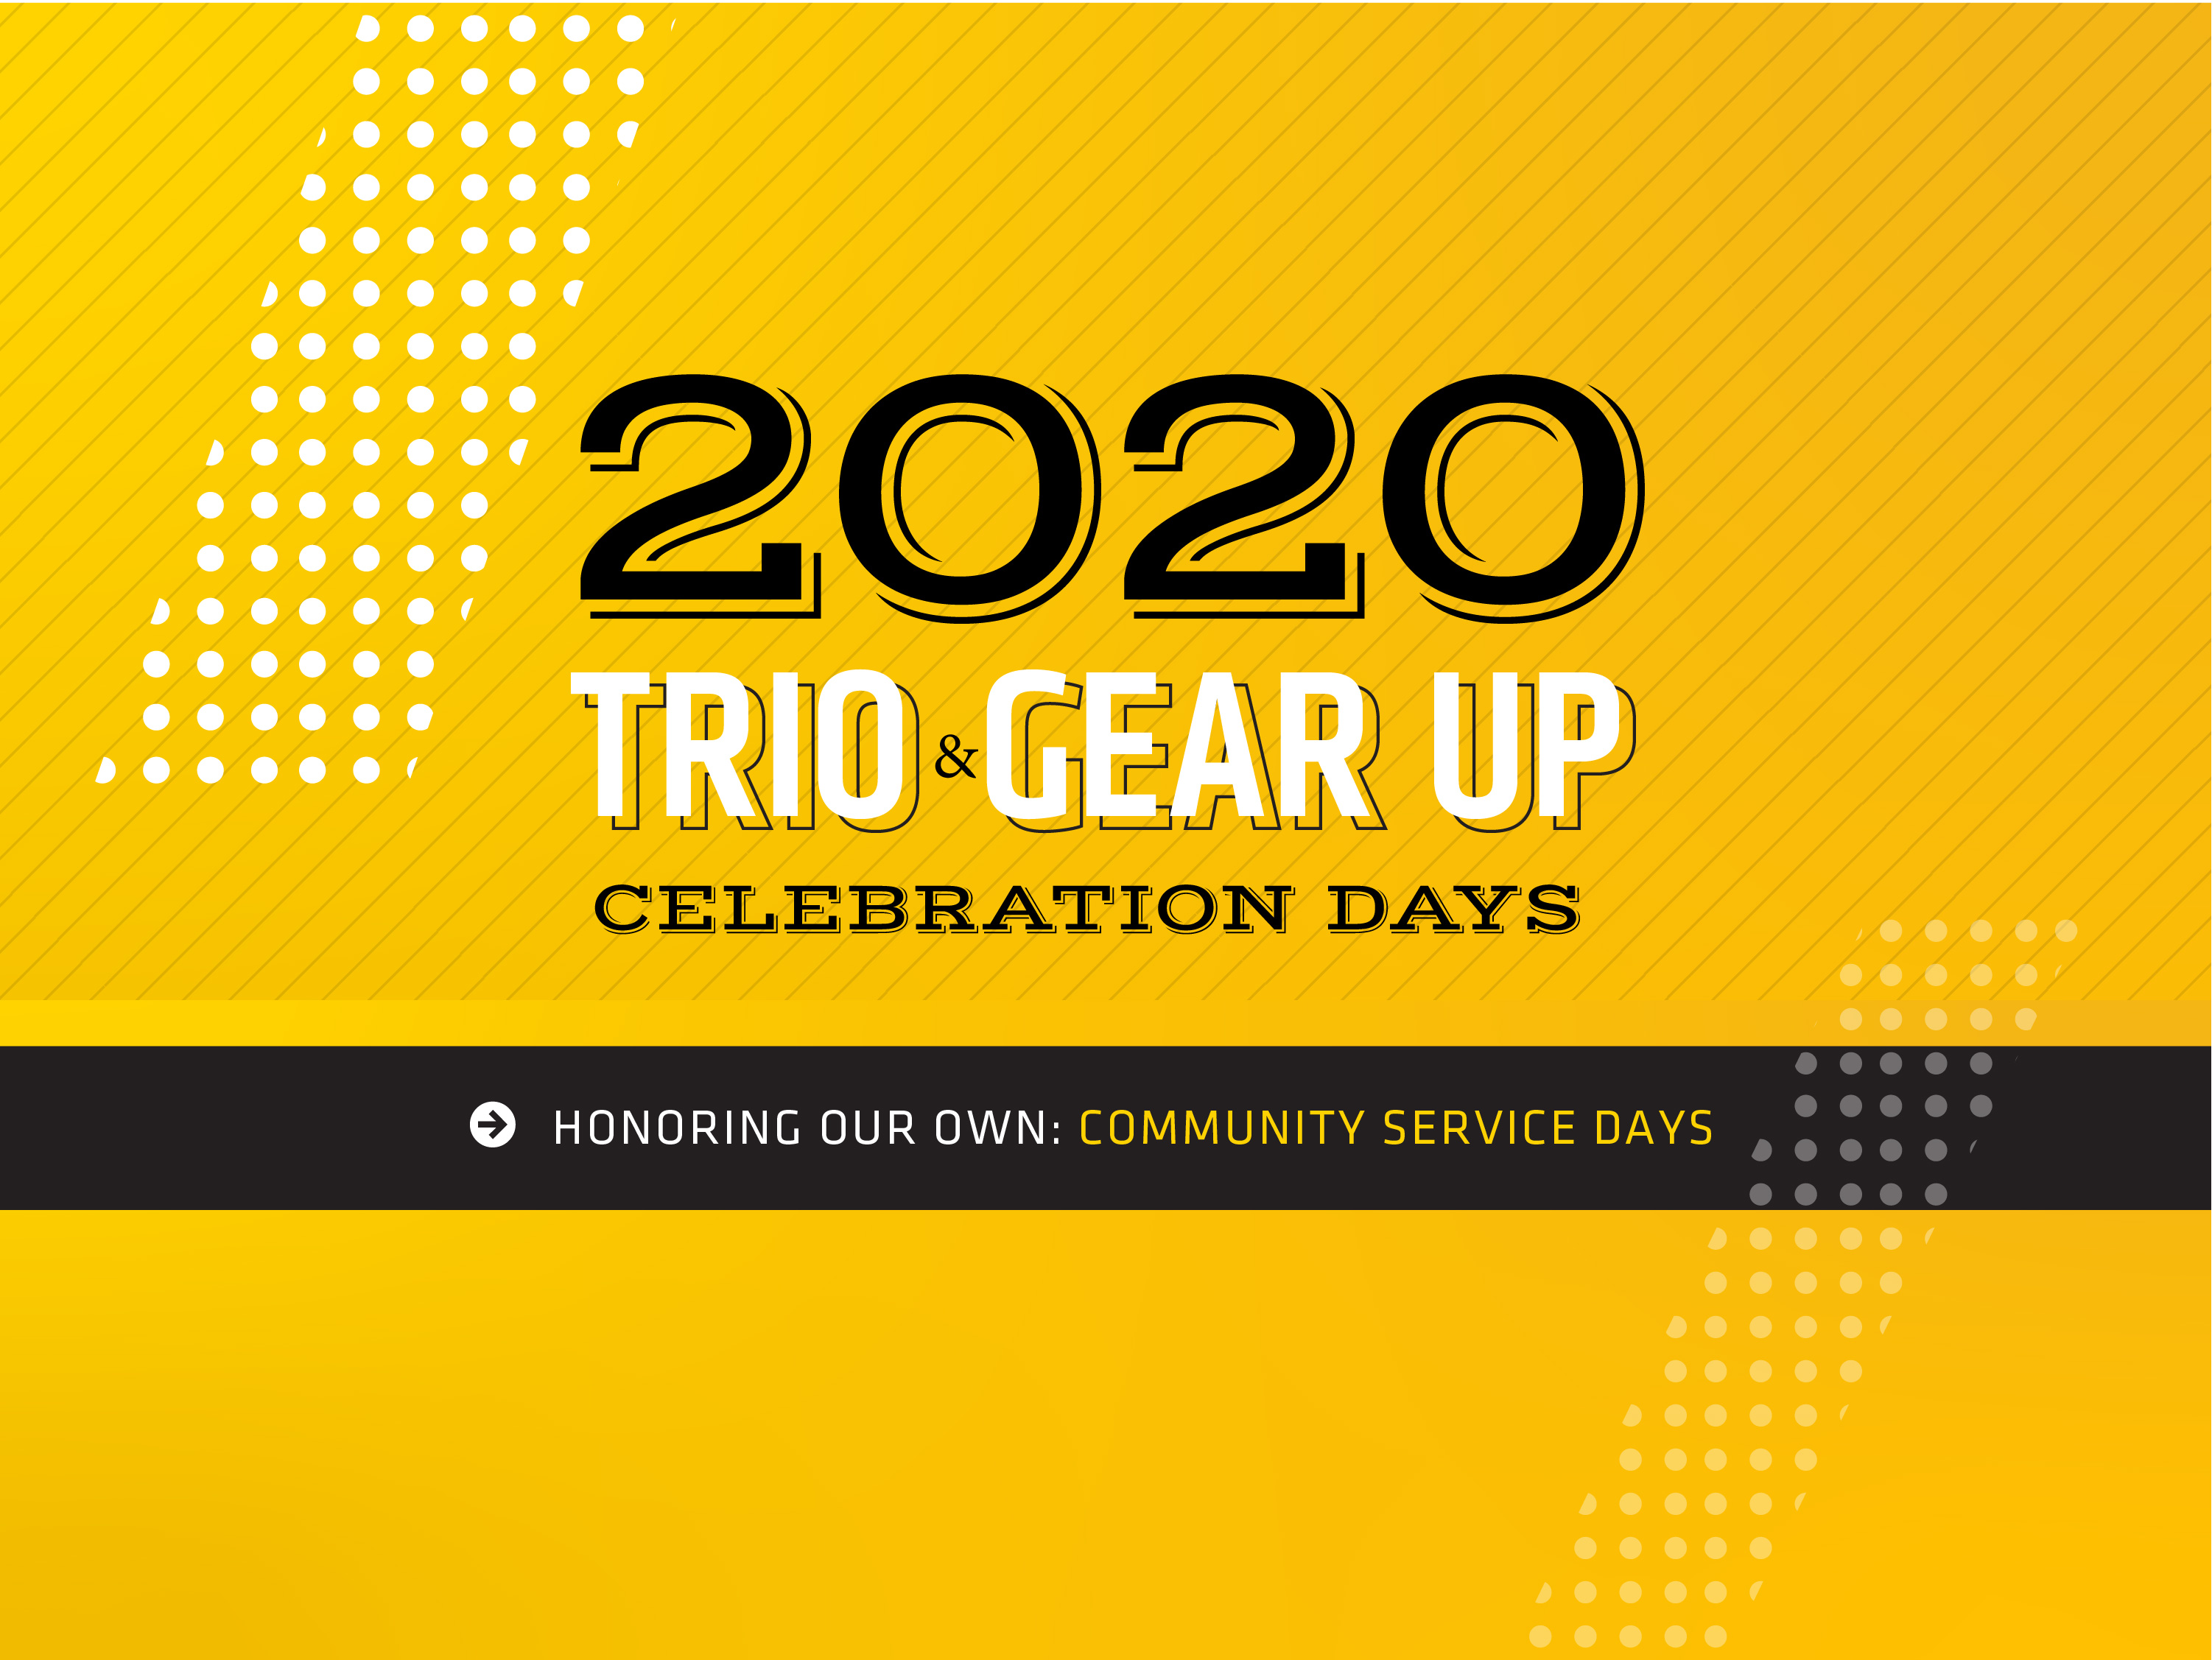 2020 TRIO GEAR UP Celebration